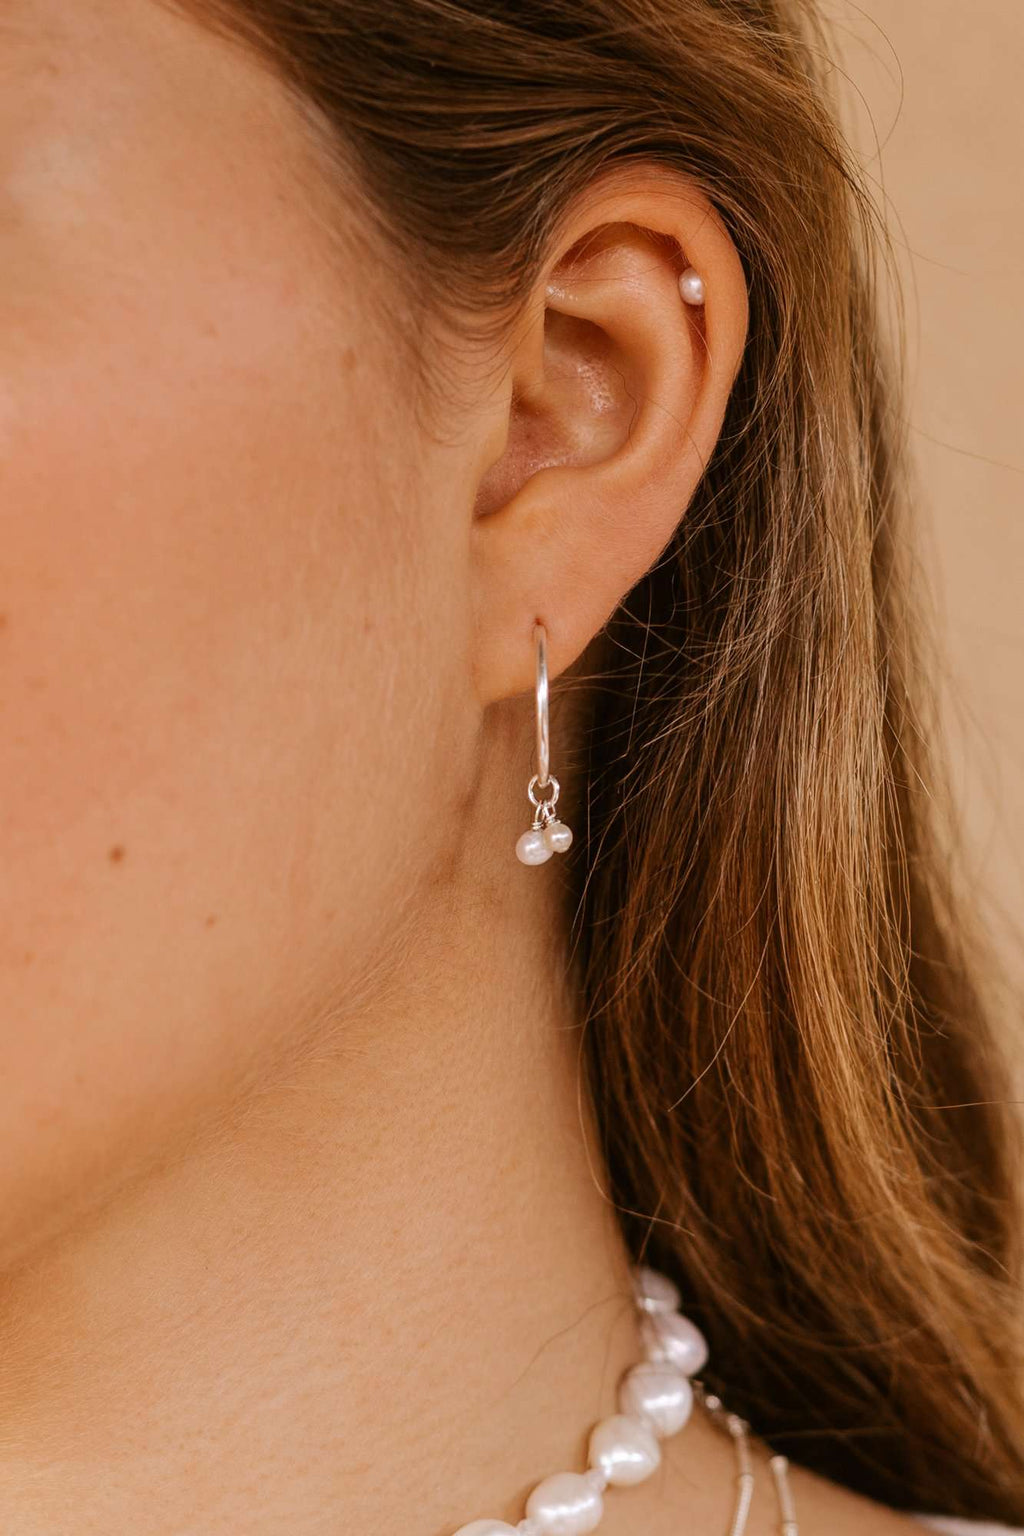 Two Pearl Hoops - Sterling Silver, Earrings with  by Lunarsea Designs